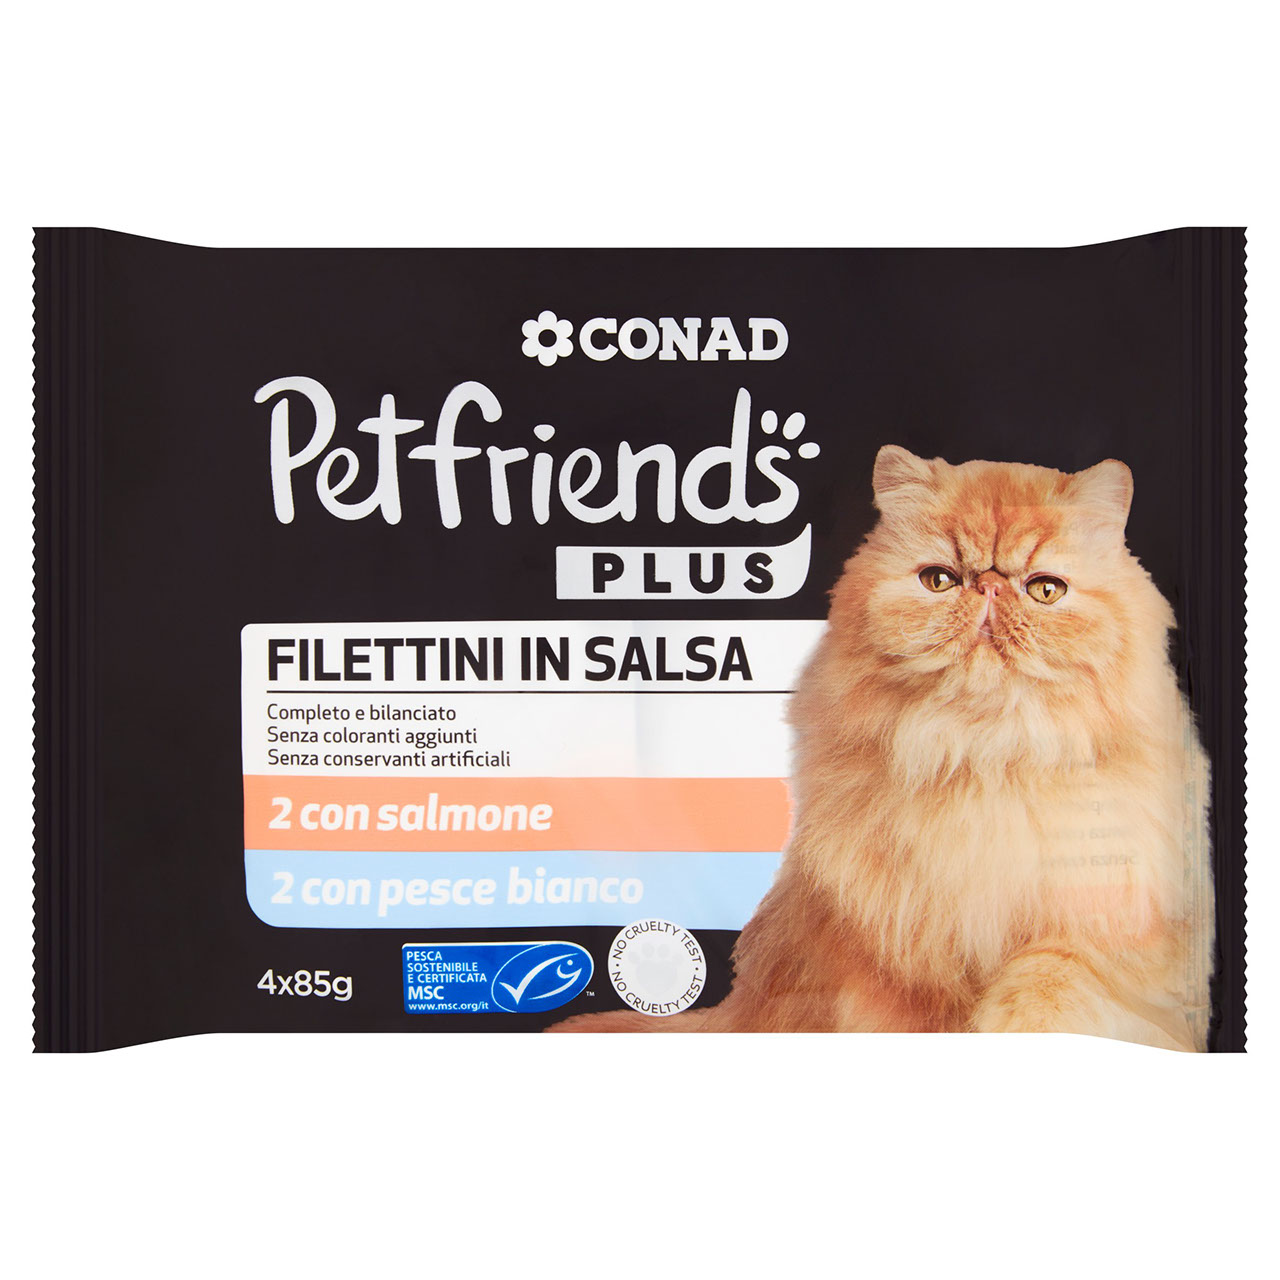 Petfriends Plus Filettini in salsa Salmone e Pesce